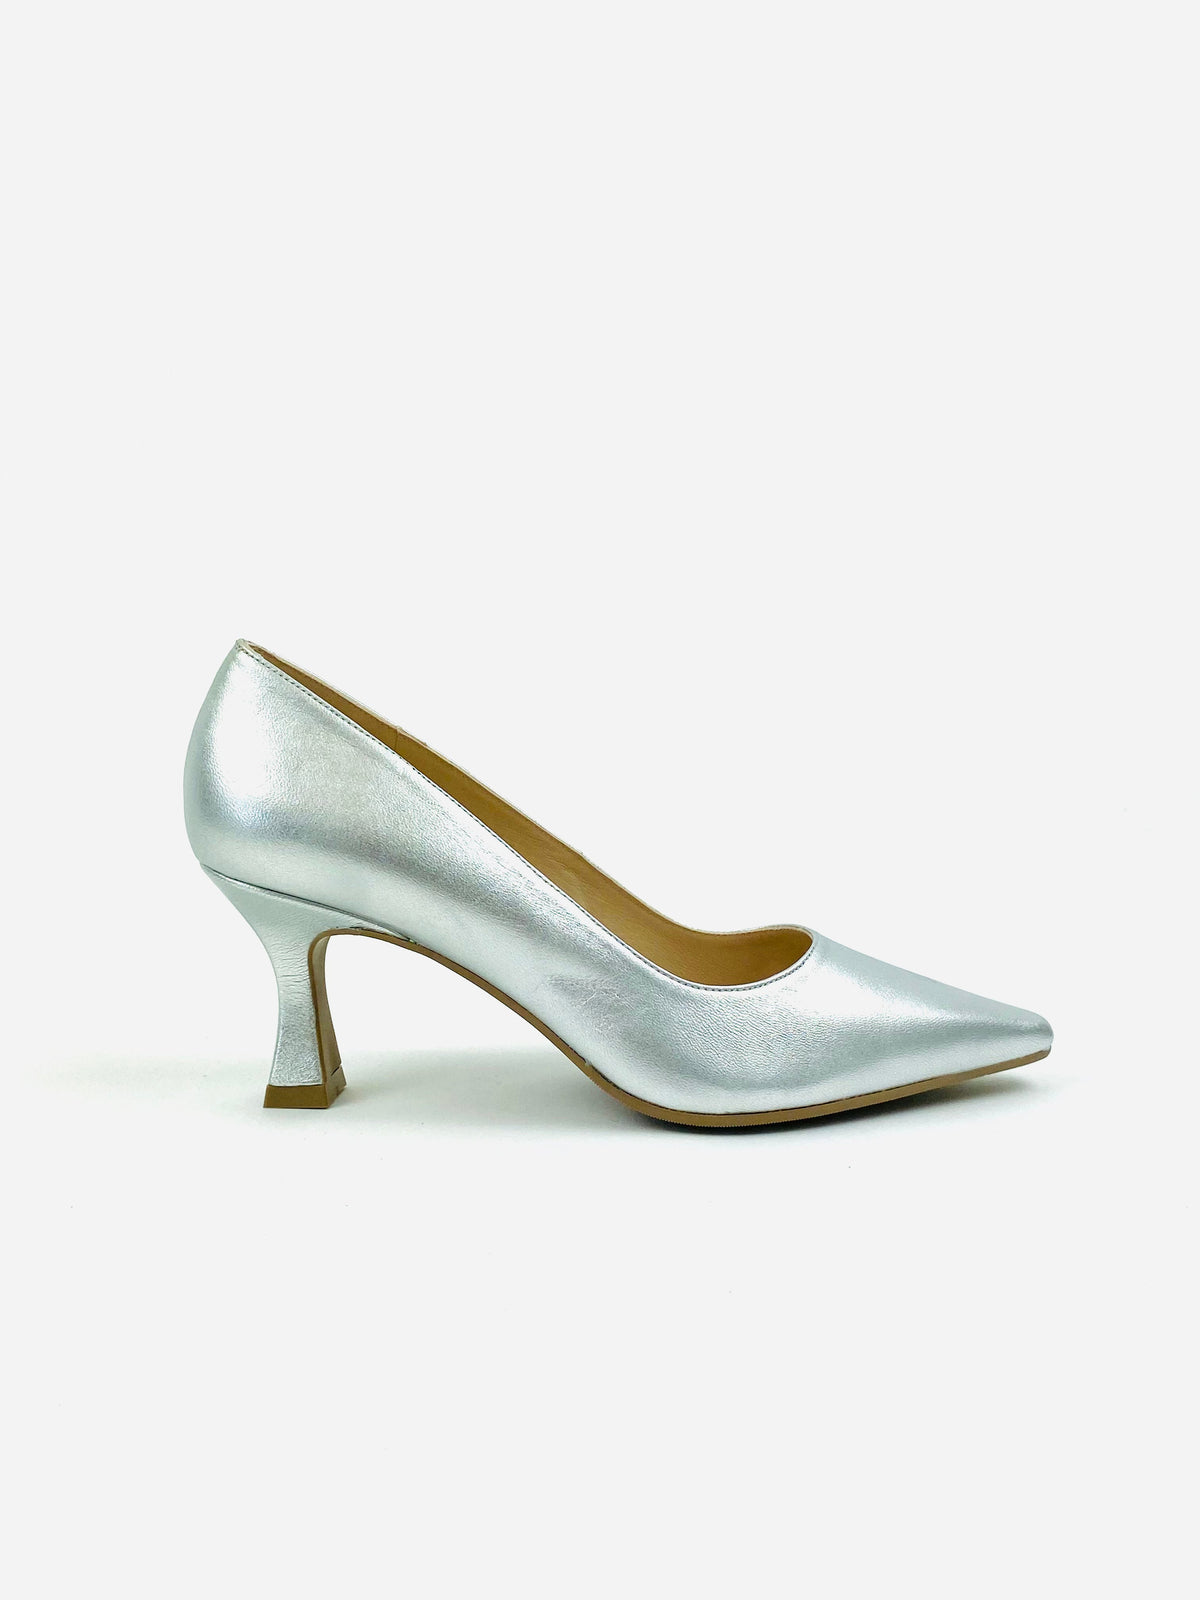 Lodi - Jona Silver Leather Court with a Kitten heel*